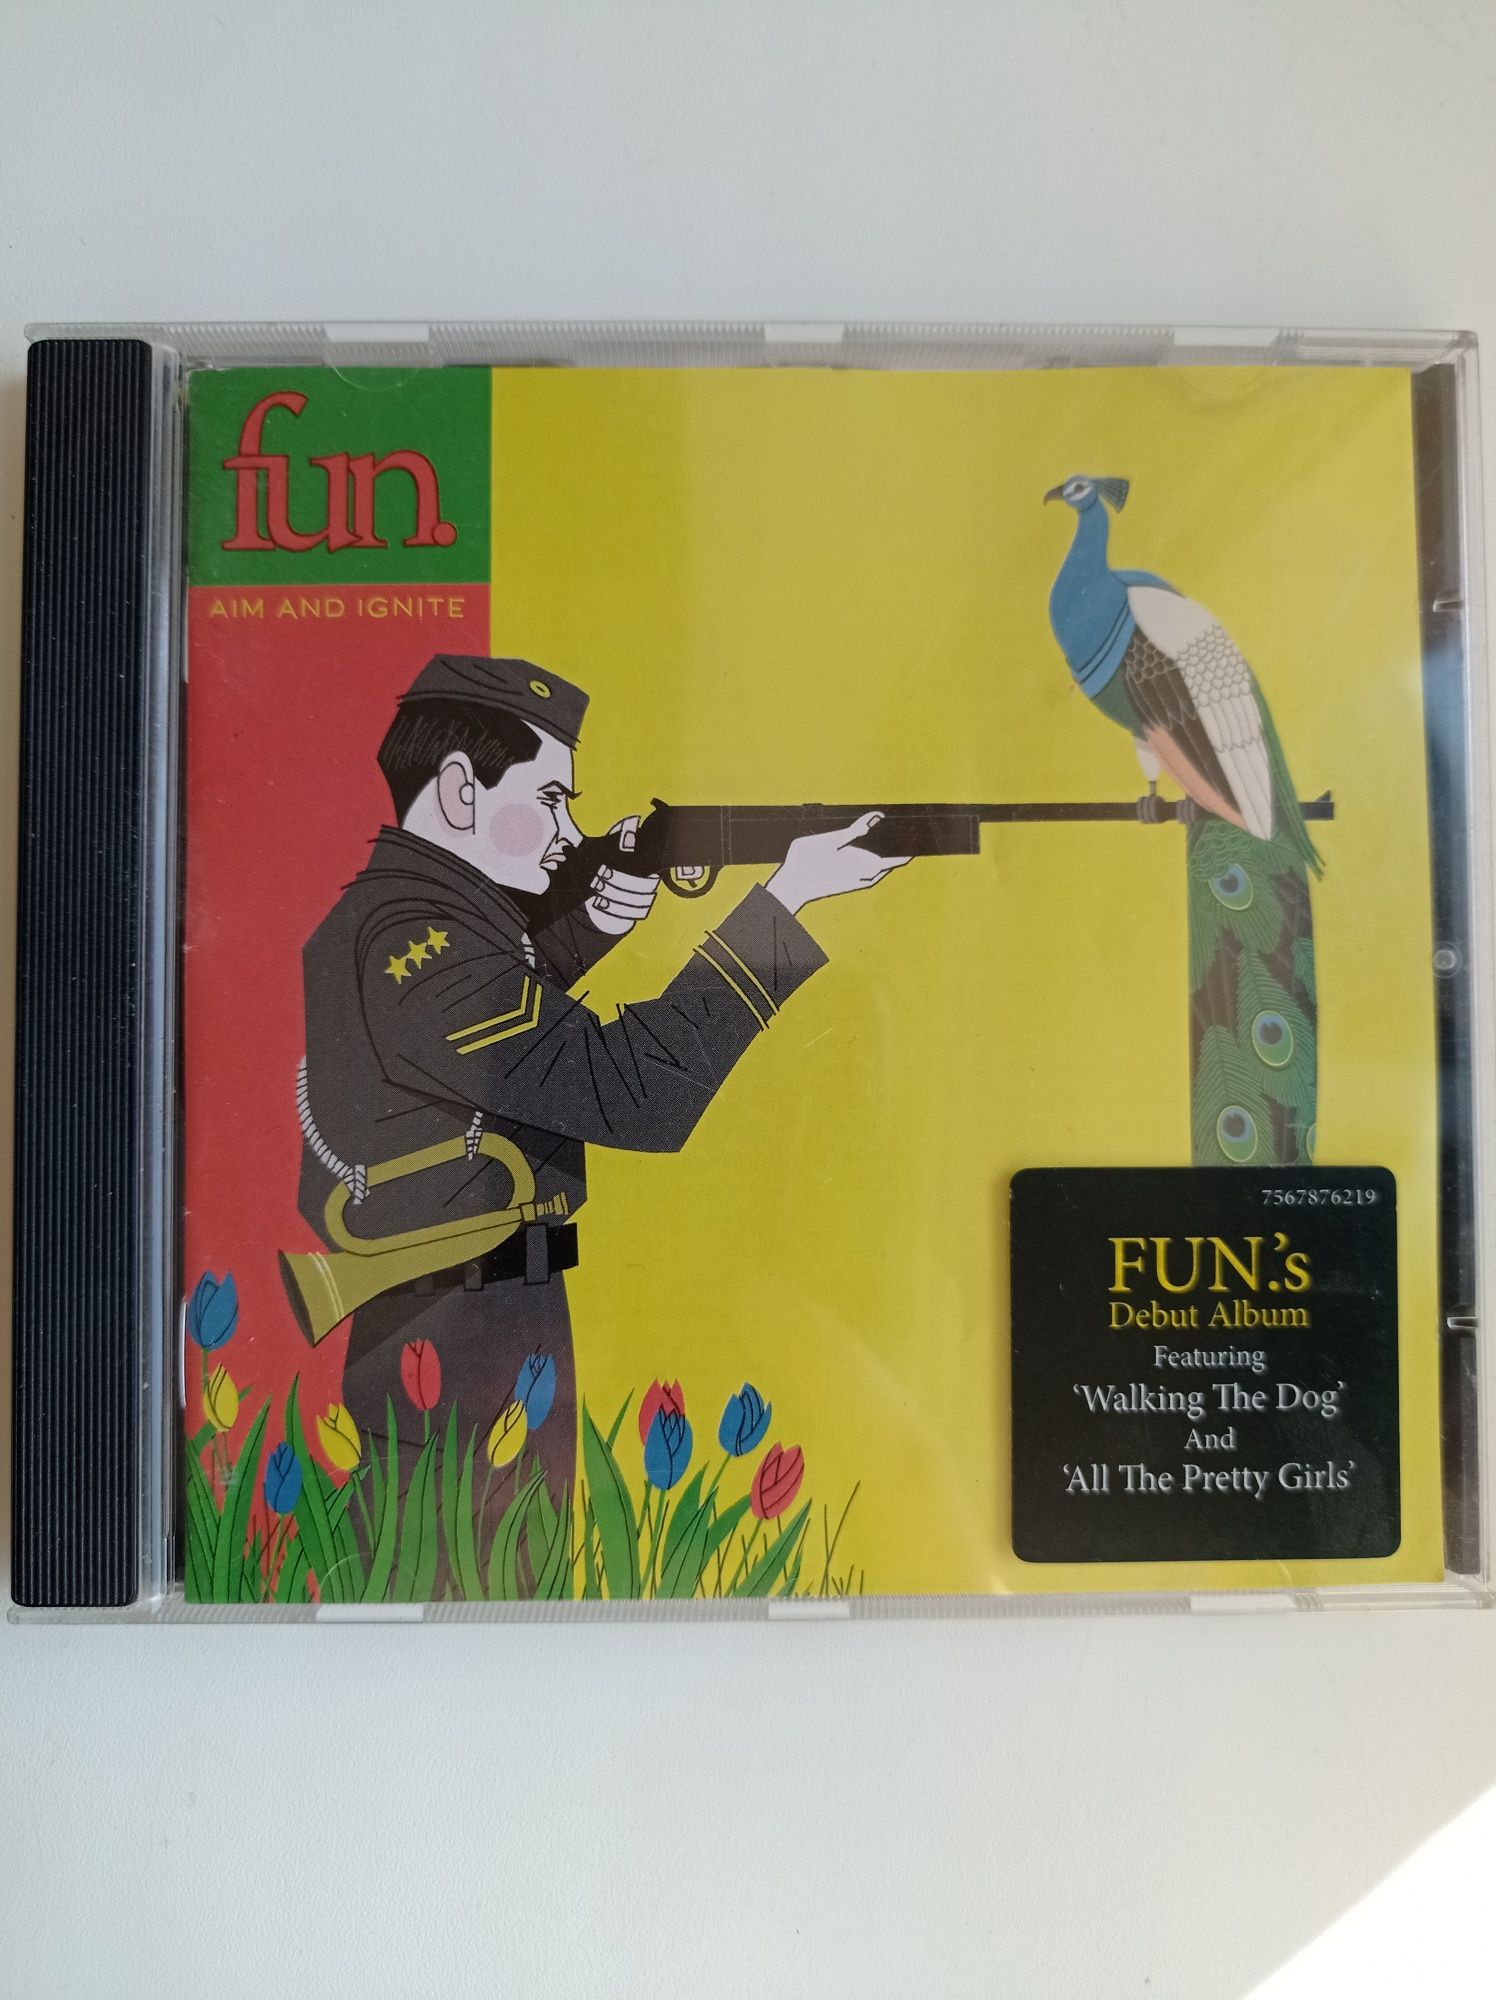 FUN. CD Aim and ignite